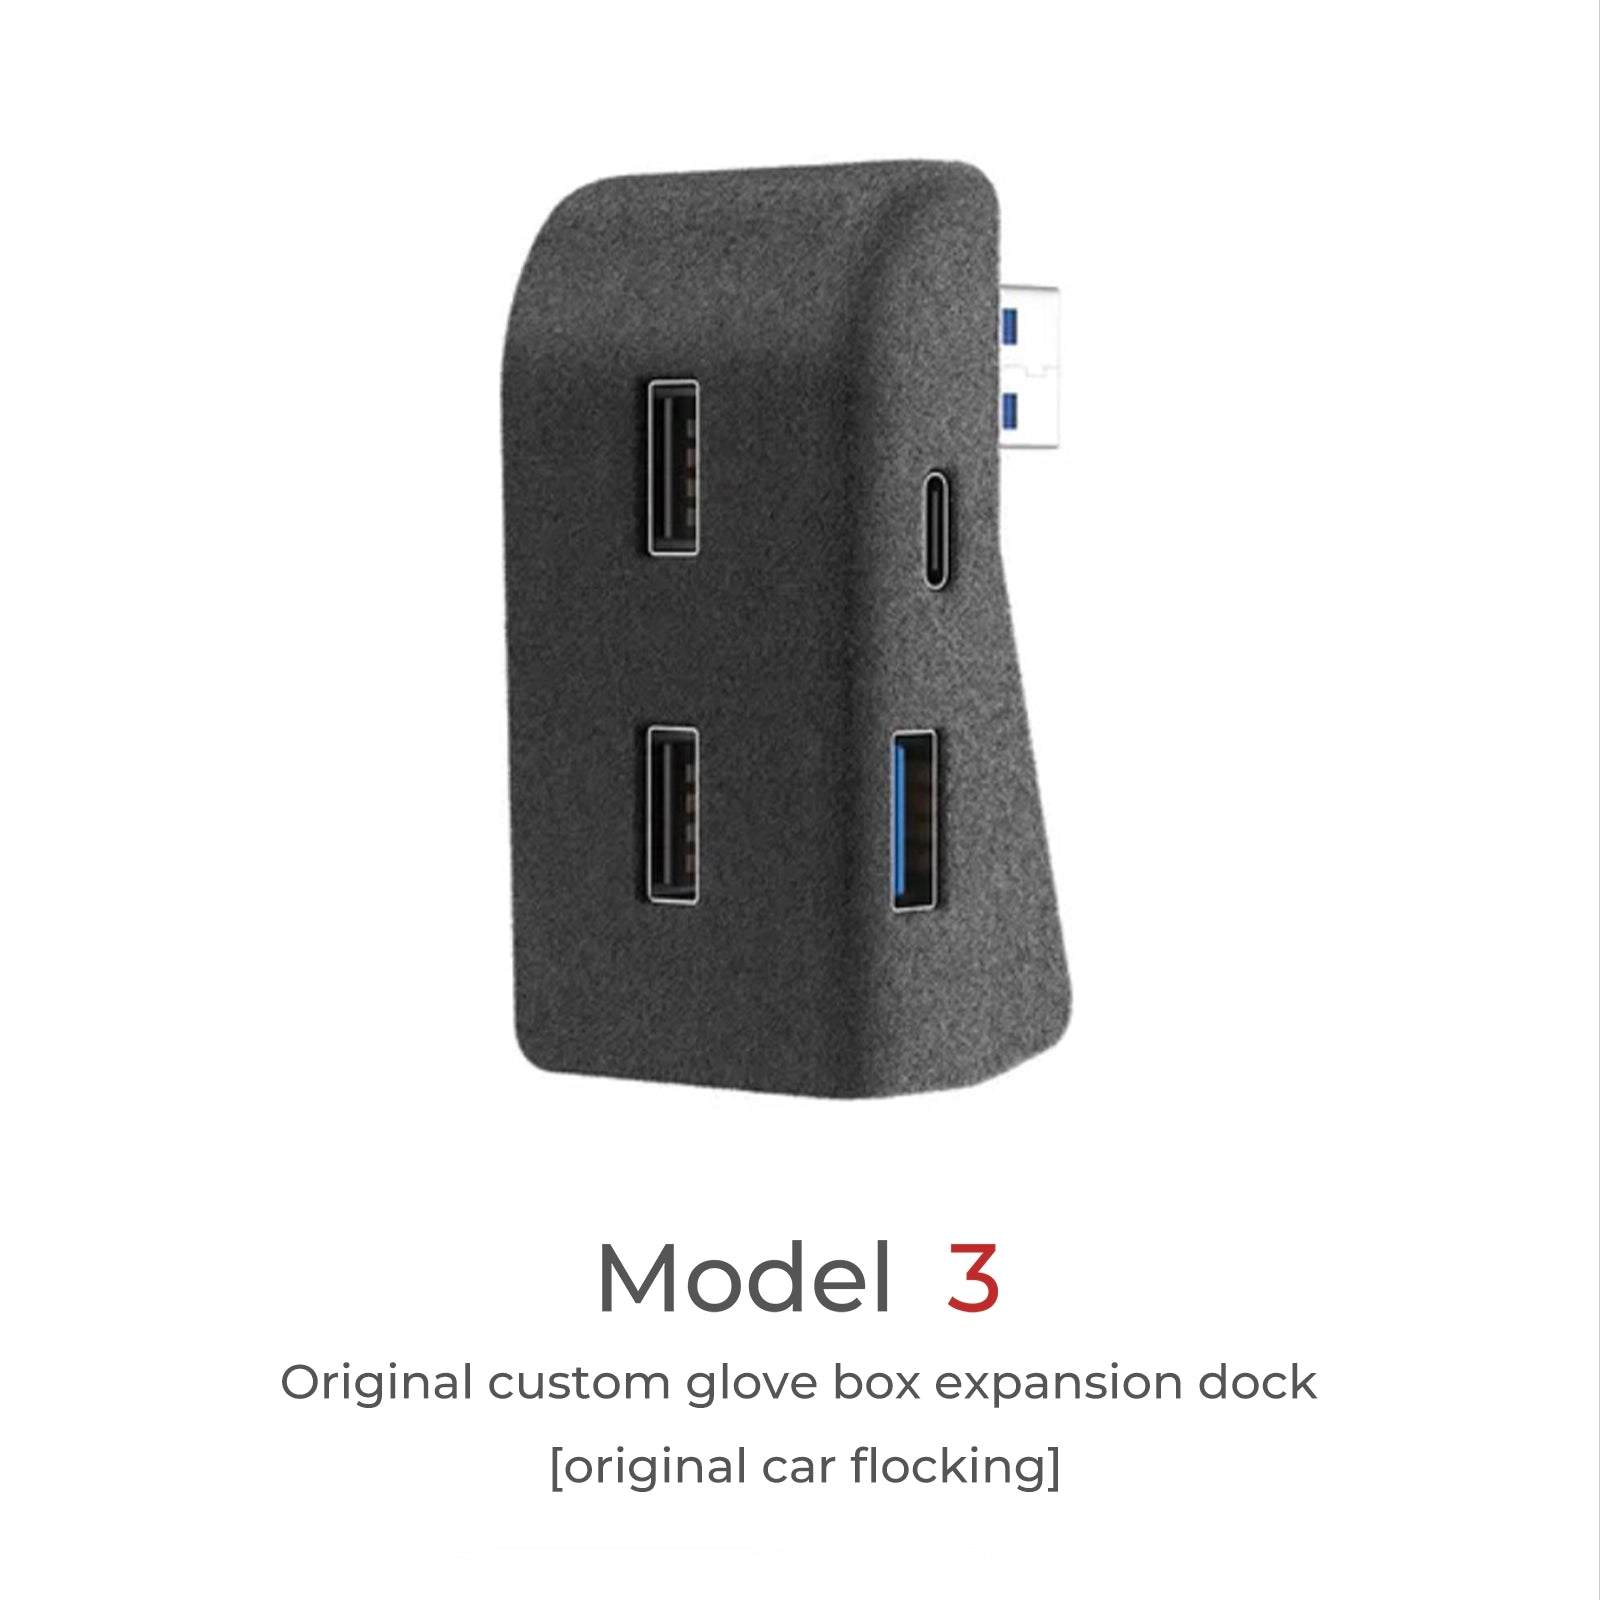 Teswing Tesla Model 3 Highland Expansion Dock USB HUB